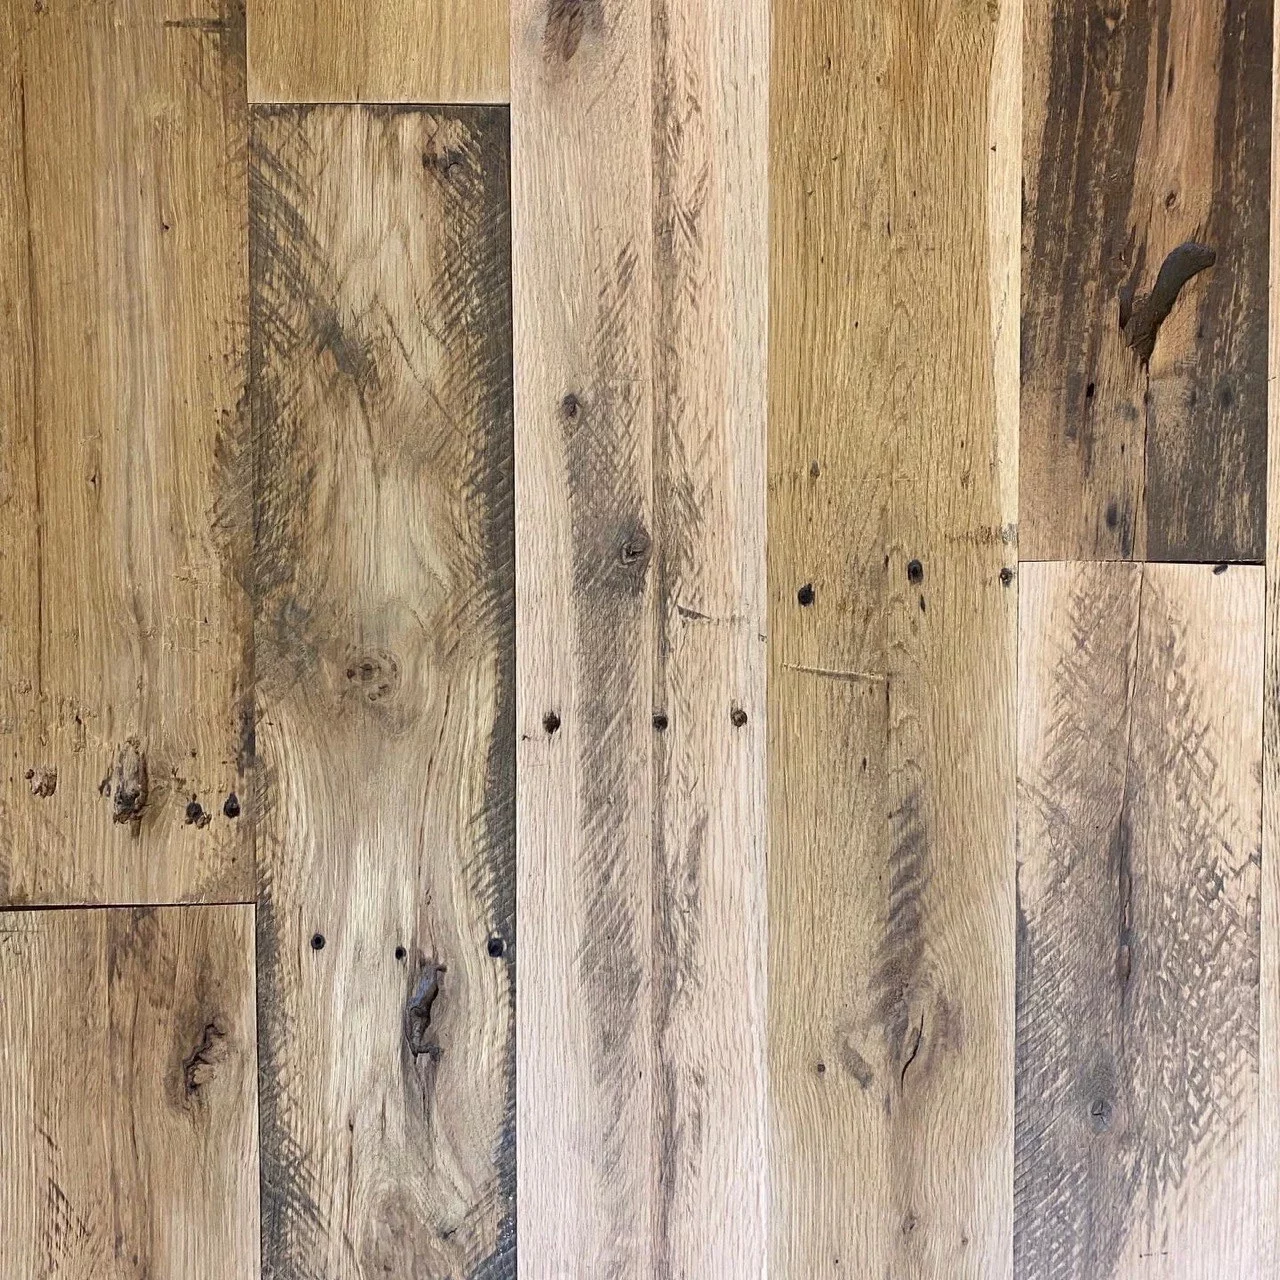 Edgefield mixed hardwoods flooring sample